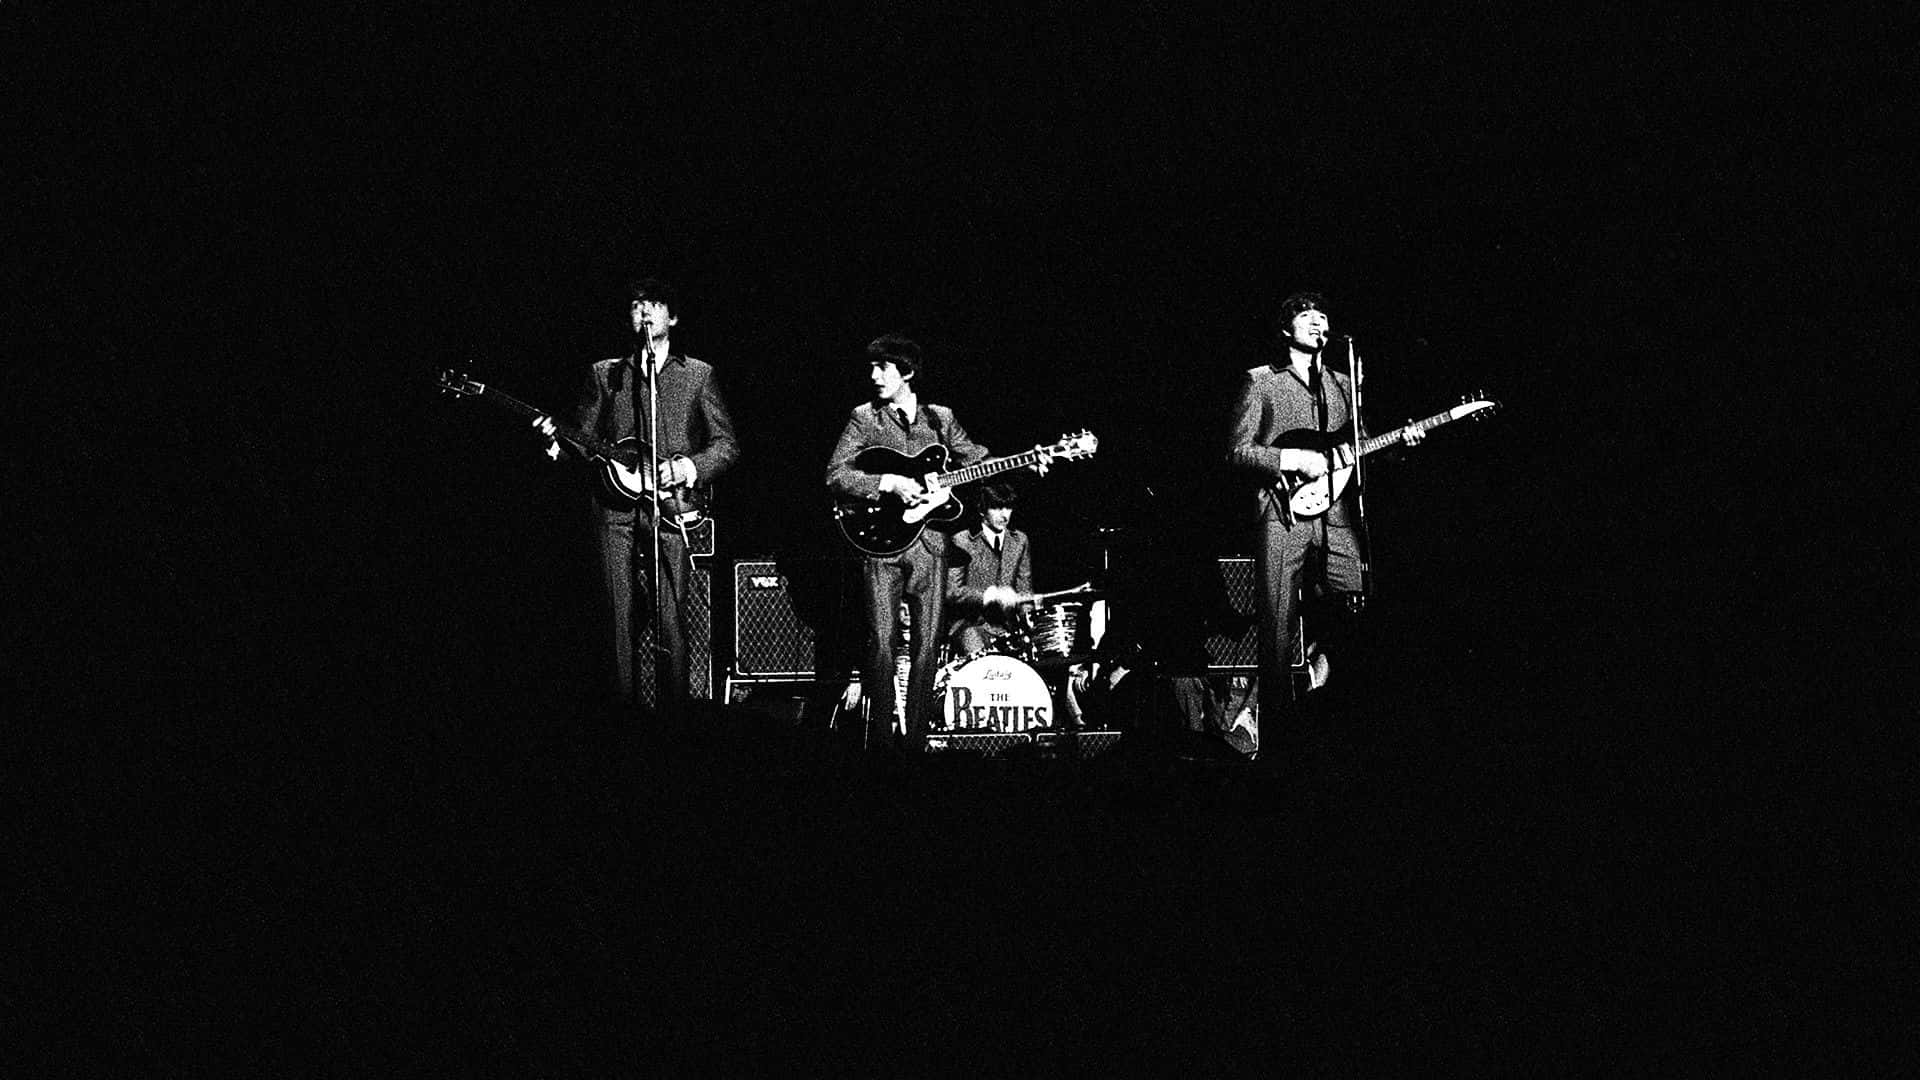 The Beatles Lads Enjoying a Live Performance